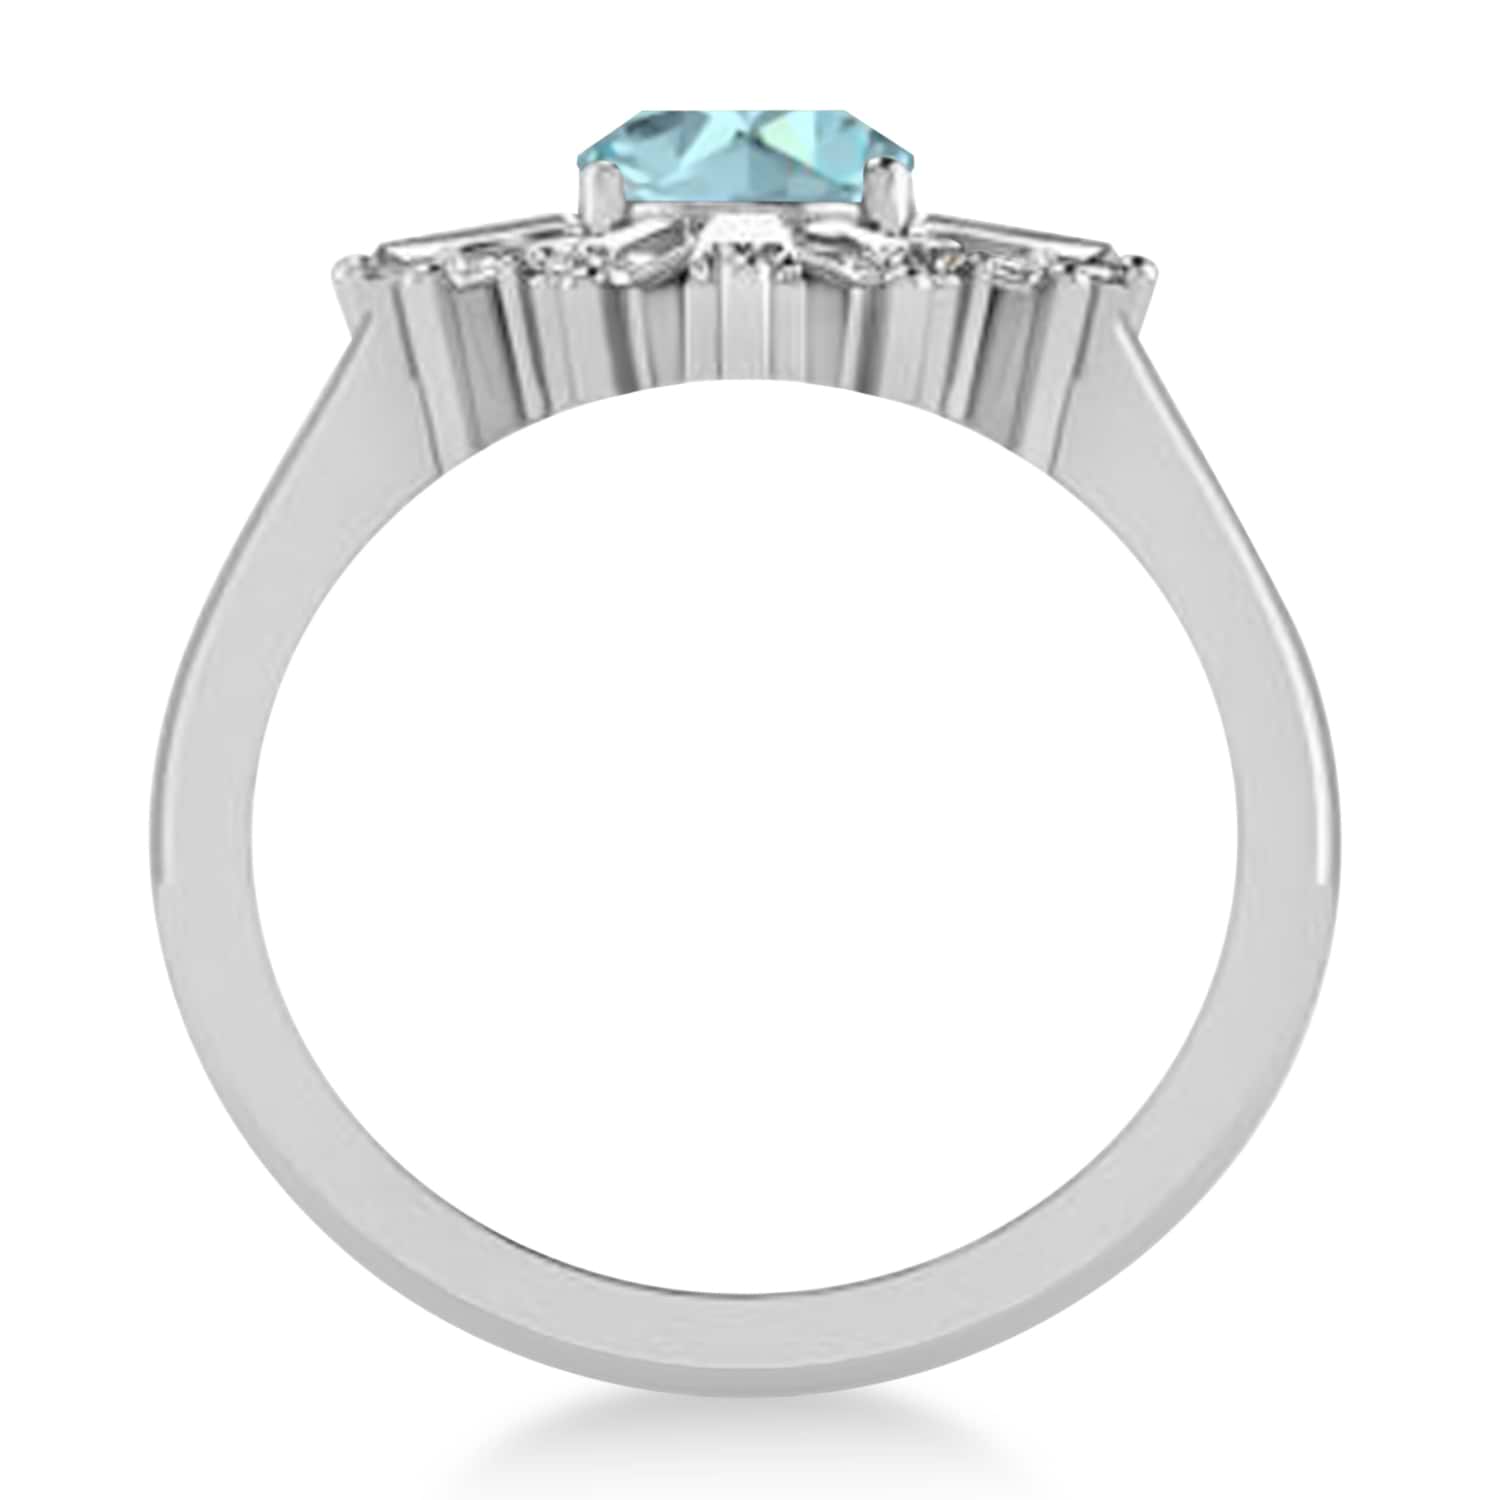 Aquamarine & Diamond Oval Cut Ballerina Engagement Ring 14k White Gold (3.06 ctw)